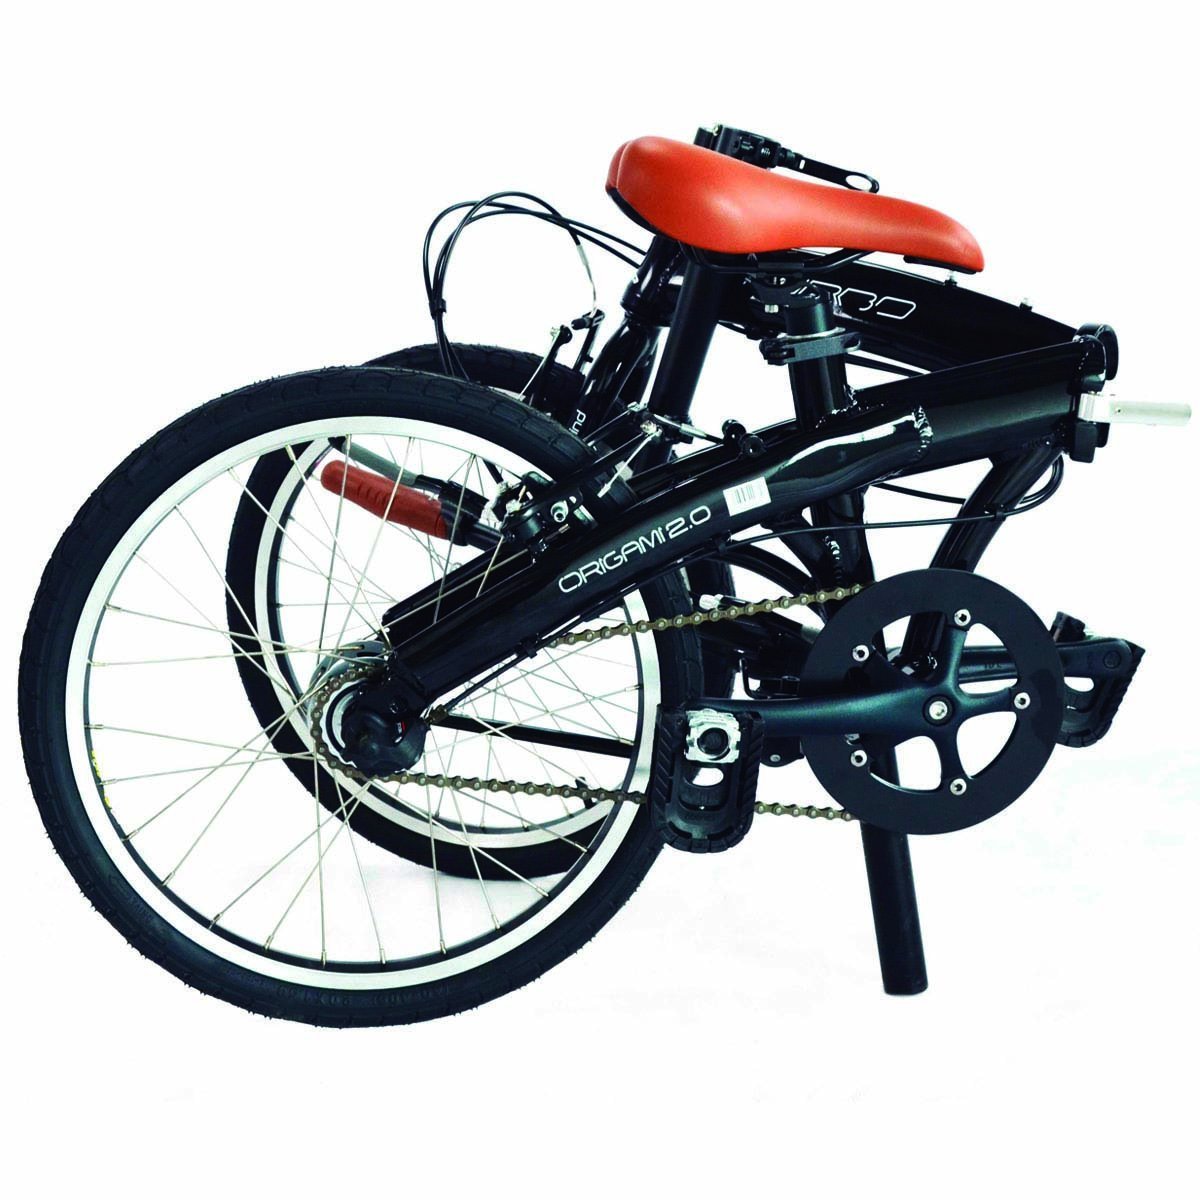 Bicicleta R-20 Origami 2.0 Shimano Nexus Turbo